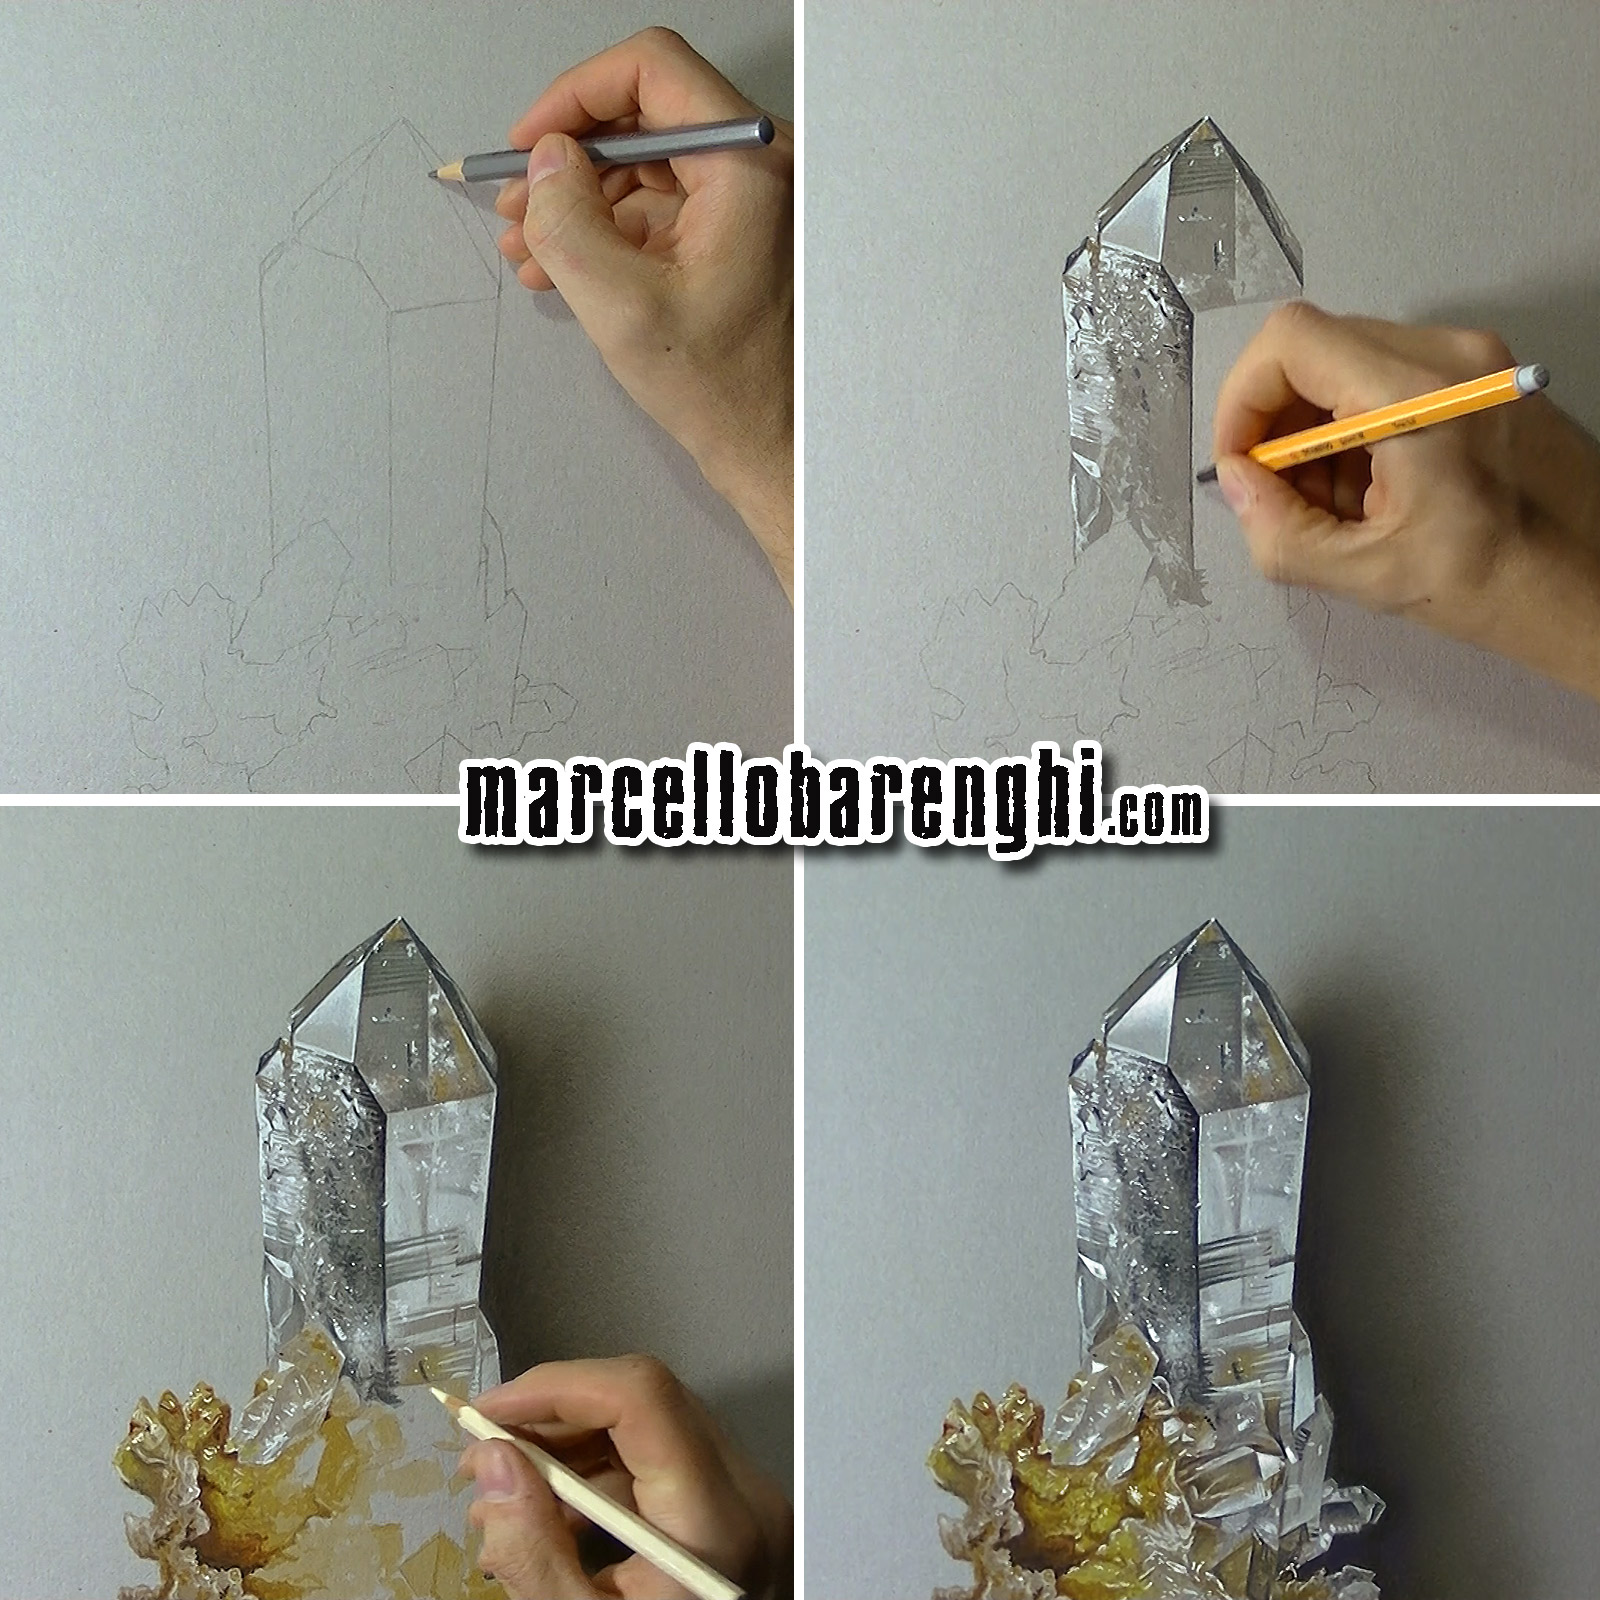 © Marcello Barenghi. Друза кристаллов прозрачного кварца (A hyaline quartz). Время рисования: 3 часа 42 минуты